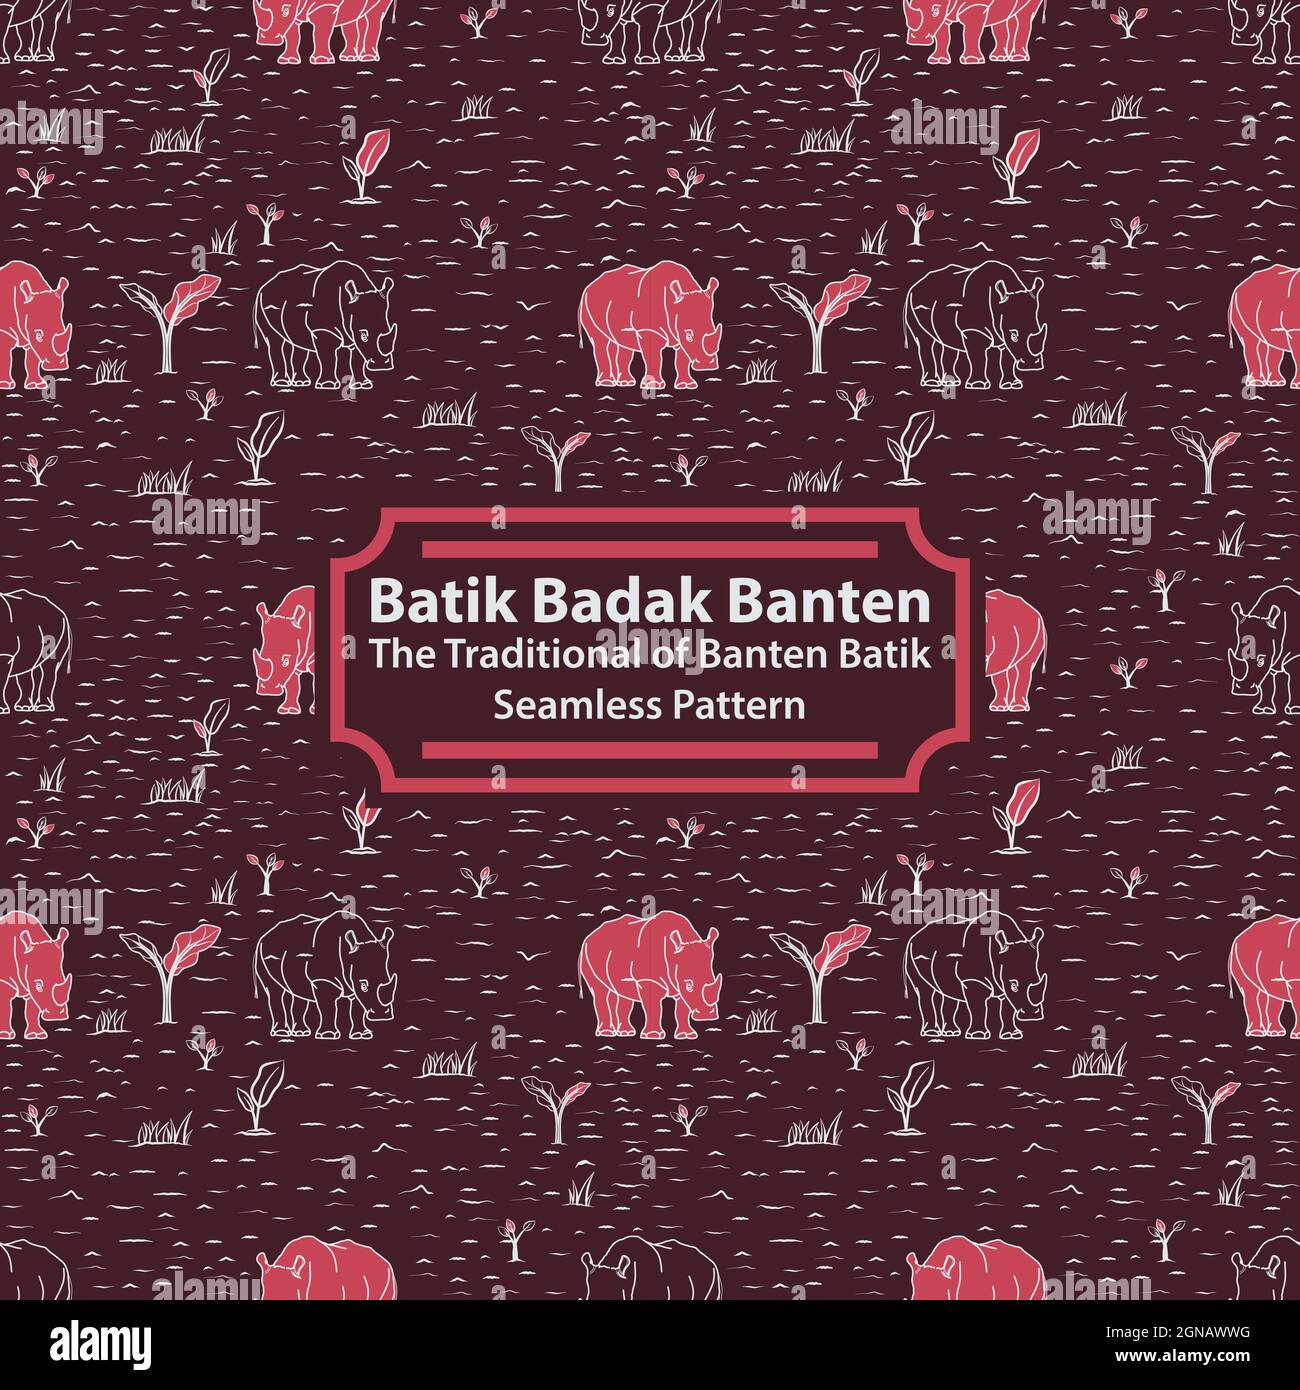 Batik Badak Banten - The Traditional of Banten Batik Seamless Pattern Stock Vector